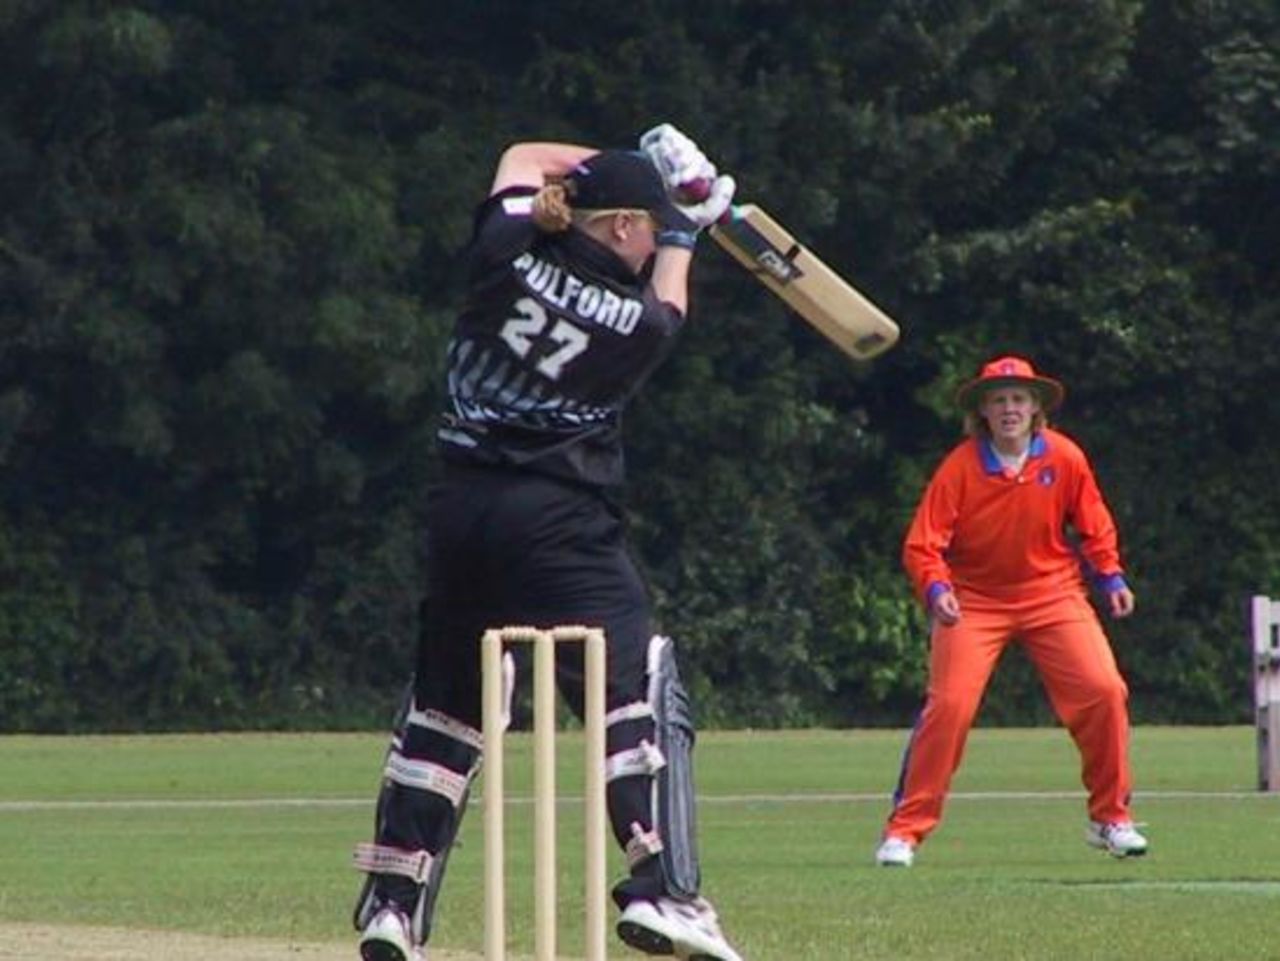 Kate Pulford batting against Netherlands, 26 June 2002